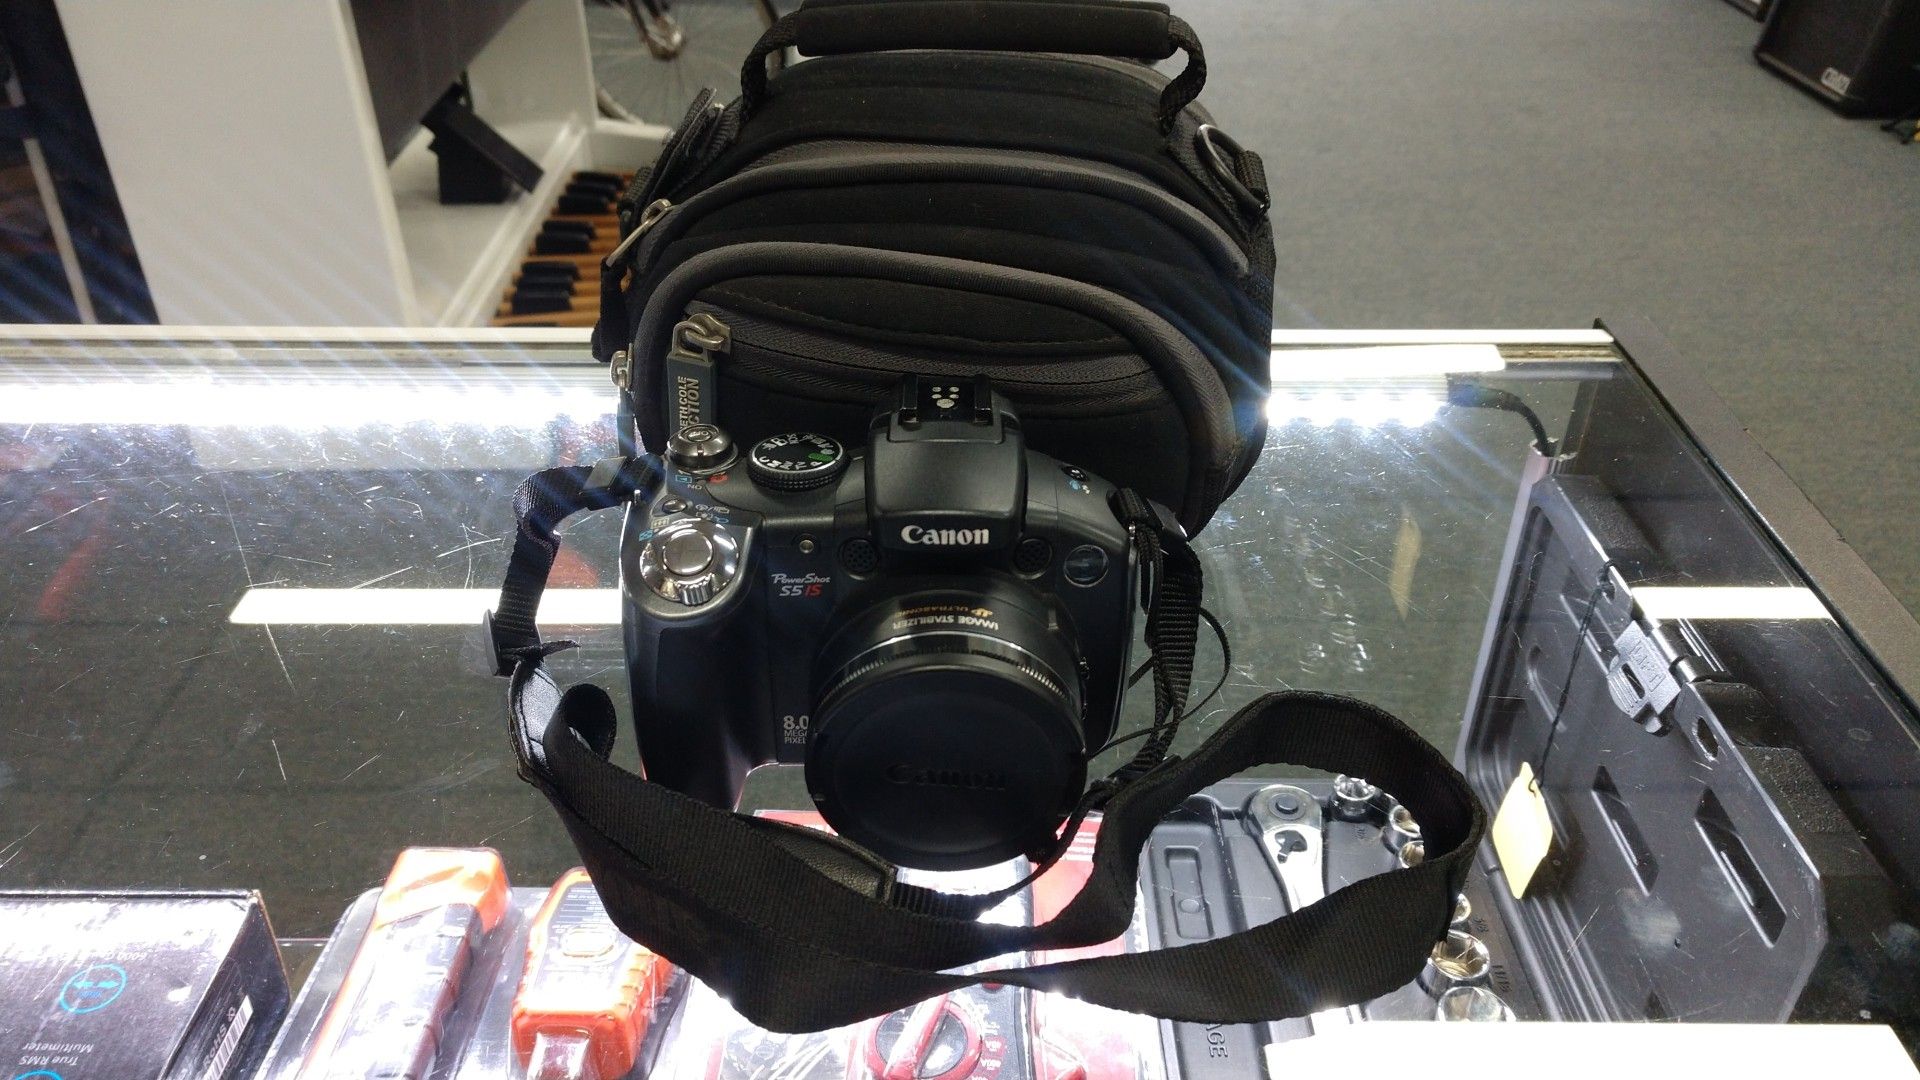 Canon PowerShot S5IS Digital Camera 8.0 Mega Pixels 4x AA Battery Powered w/ Case Works Great